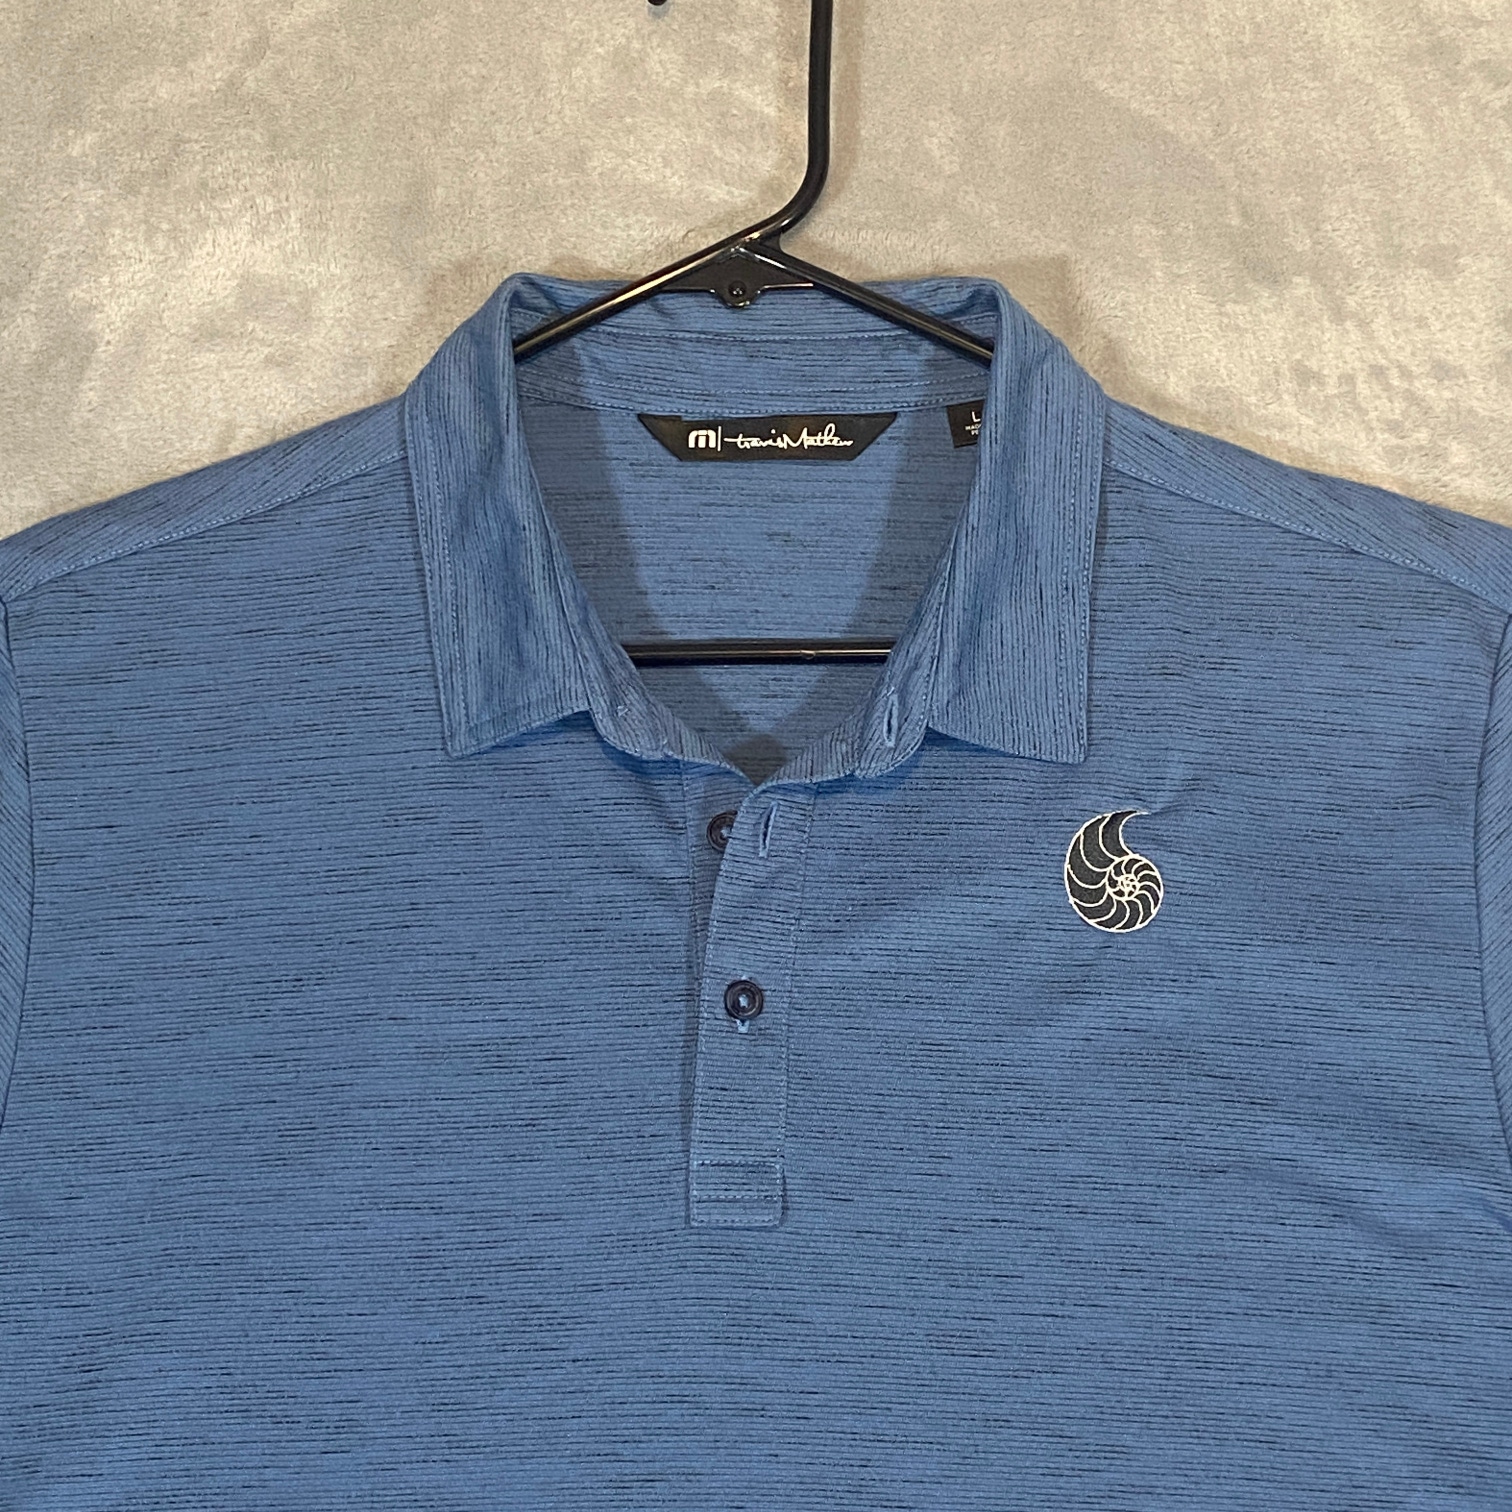 Travis Mathew Golf Polo Shirt Mens Large Blue Short Sleeve Neck & Nautilus Logos